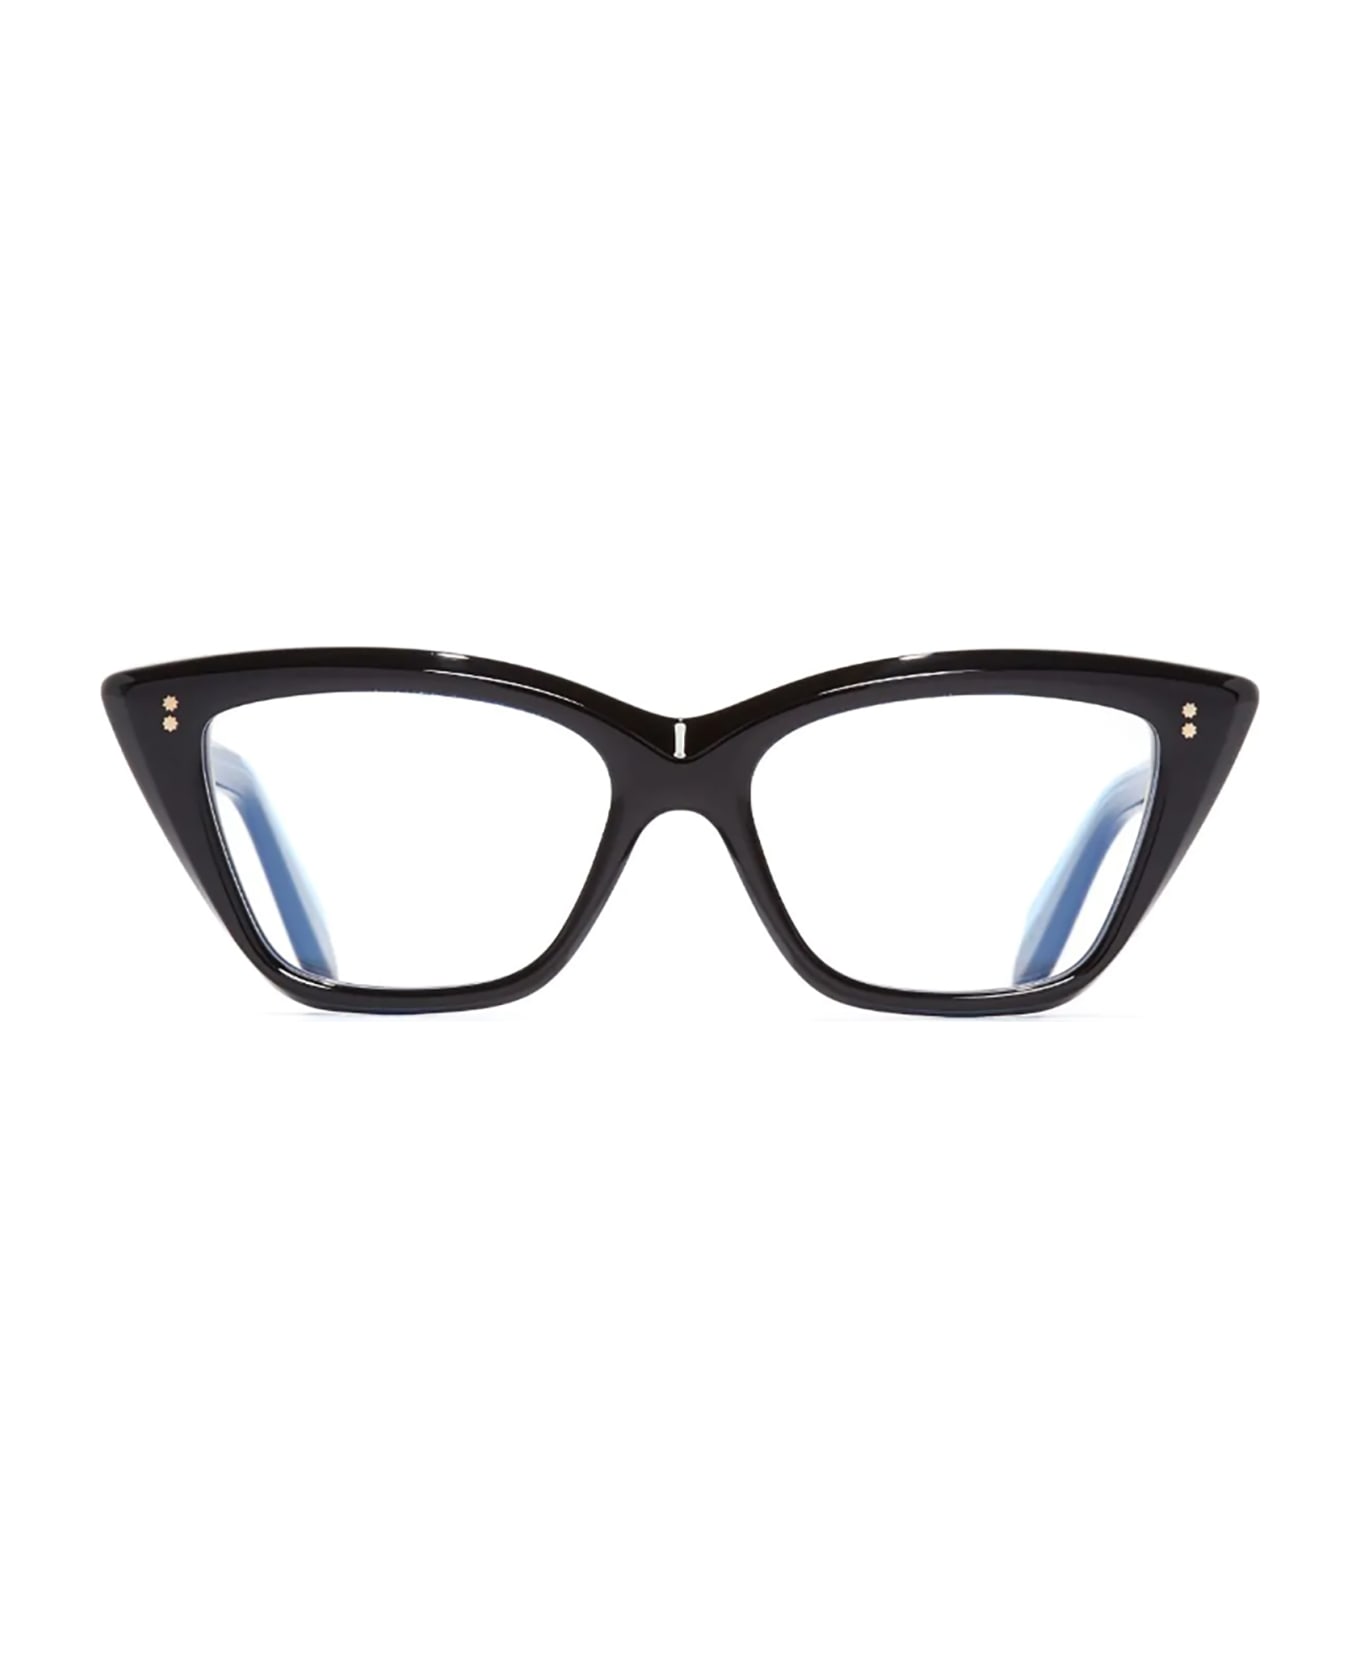 Cutler and Gross 9241 Eyewear - Blue On Black アイウェア